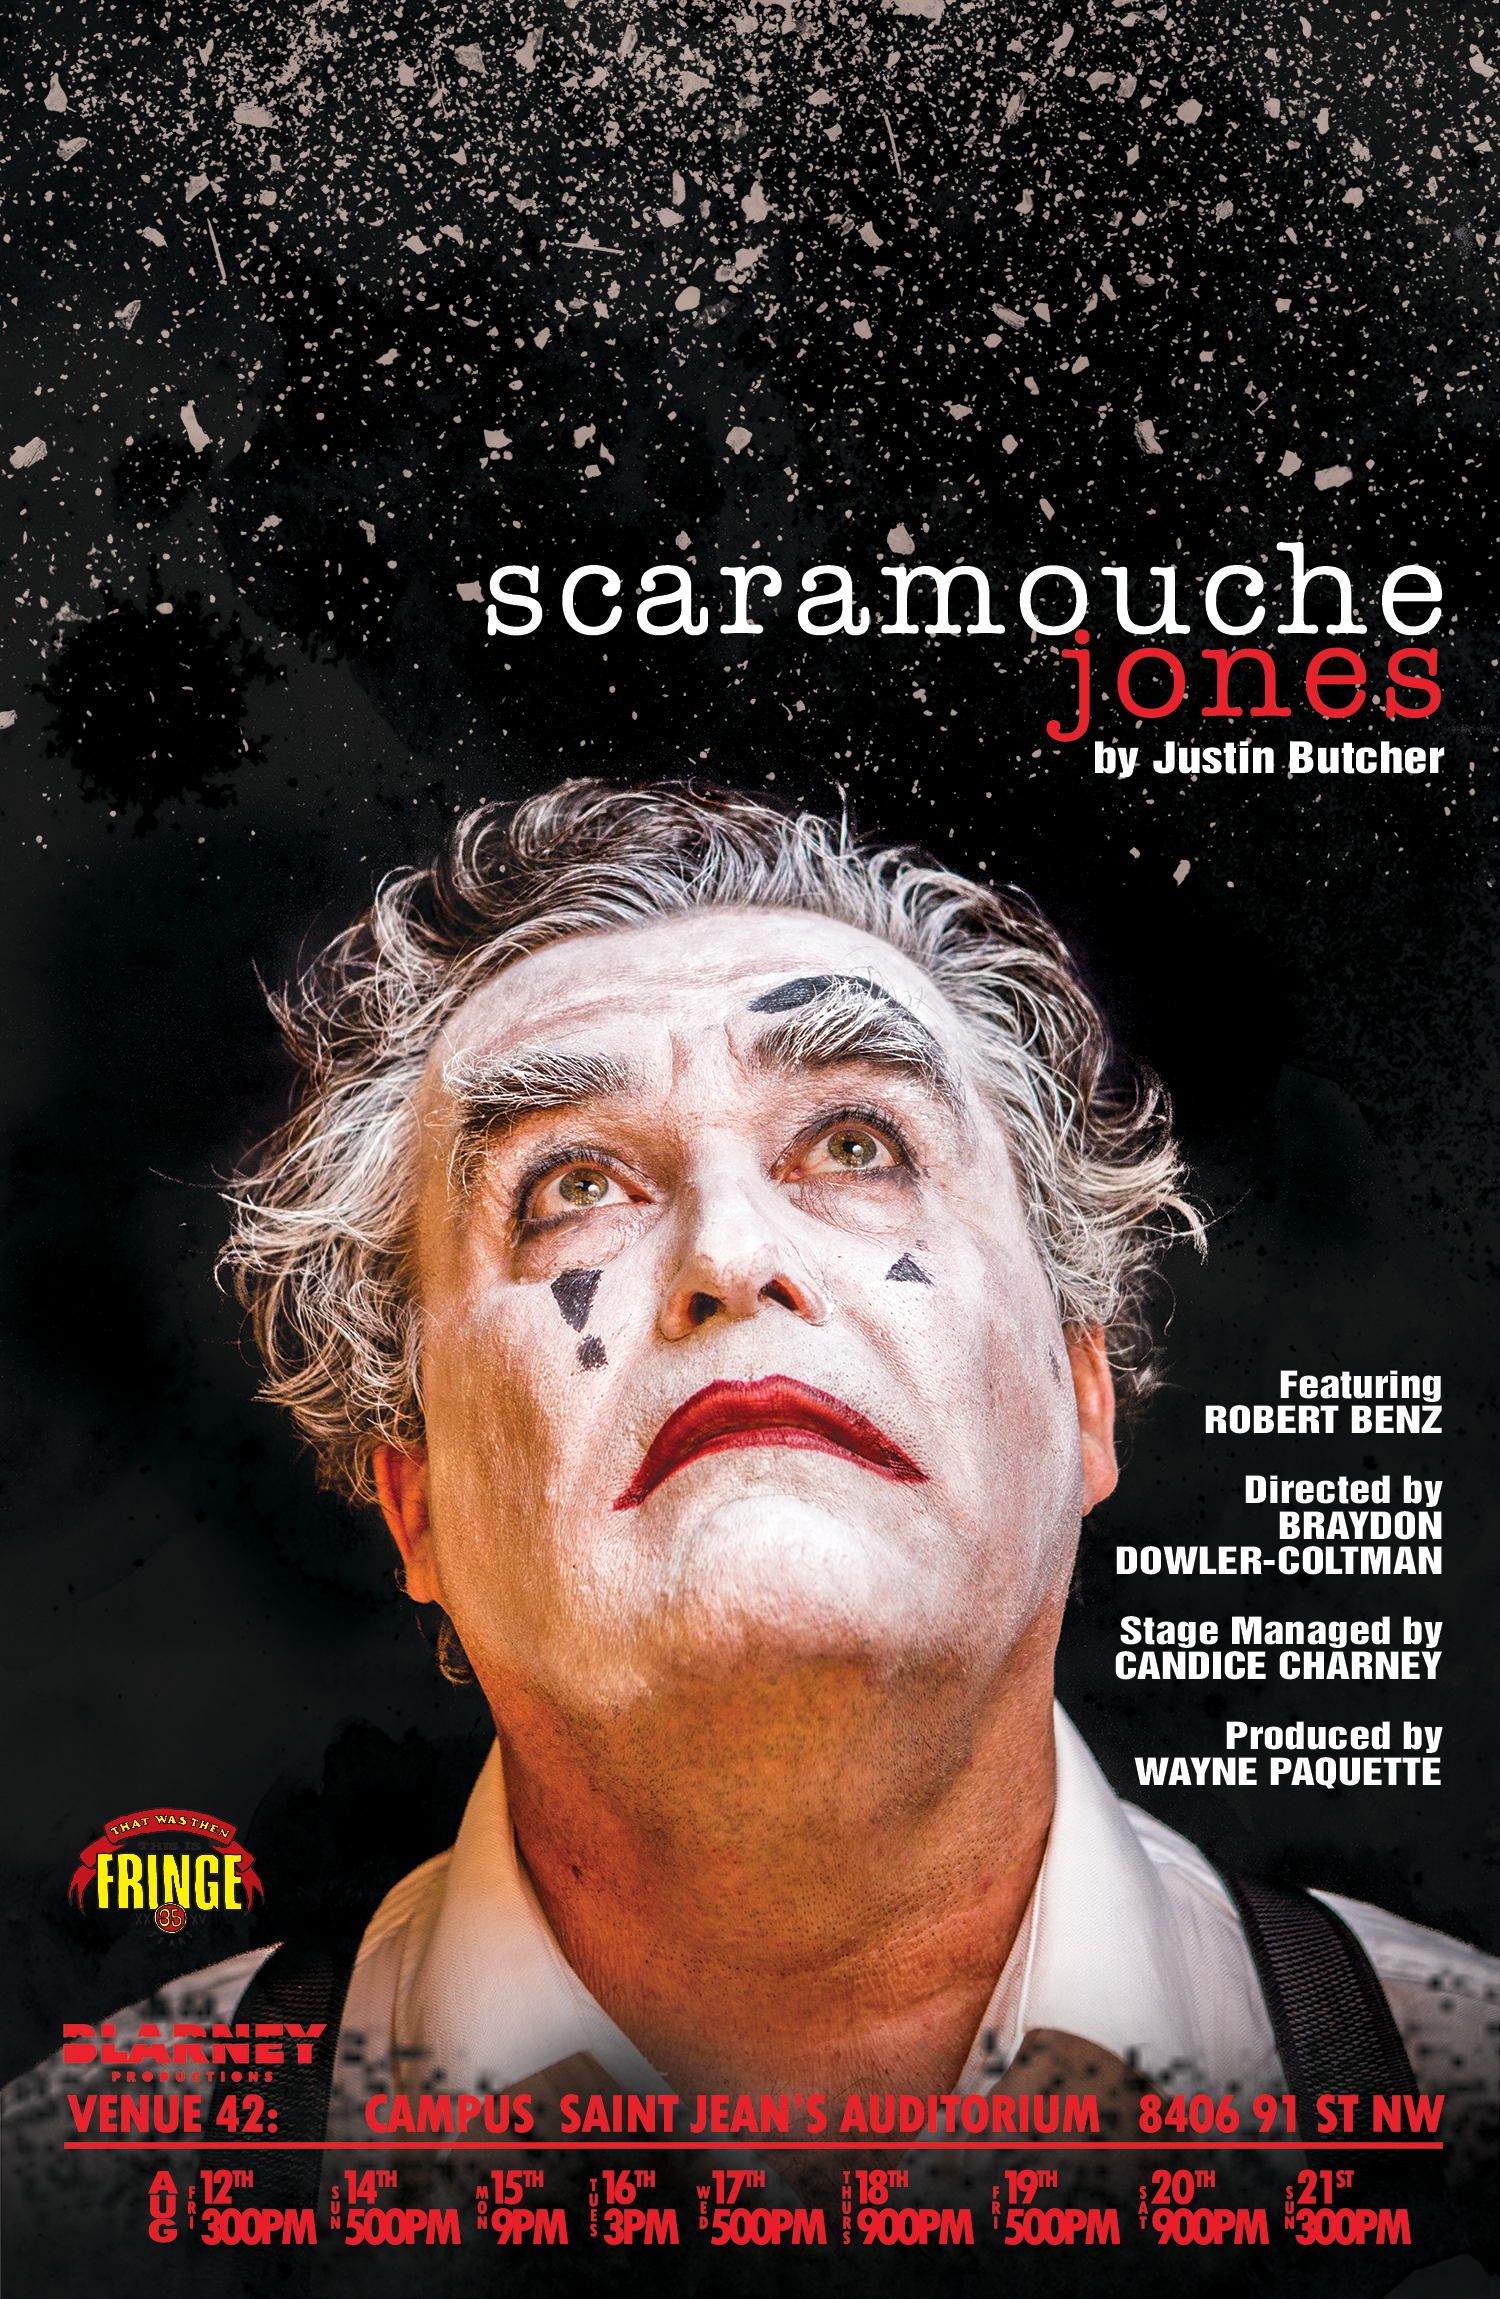 Scaramouche Jones - Poster 2 - Web.png